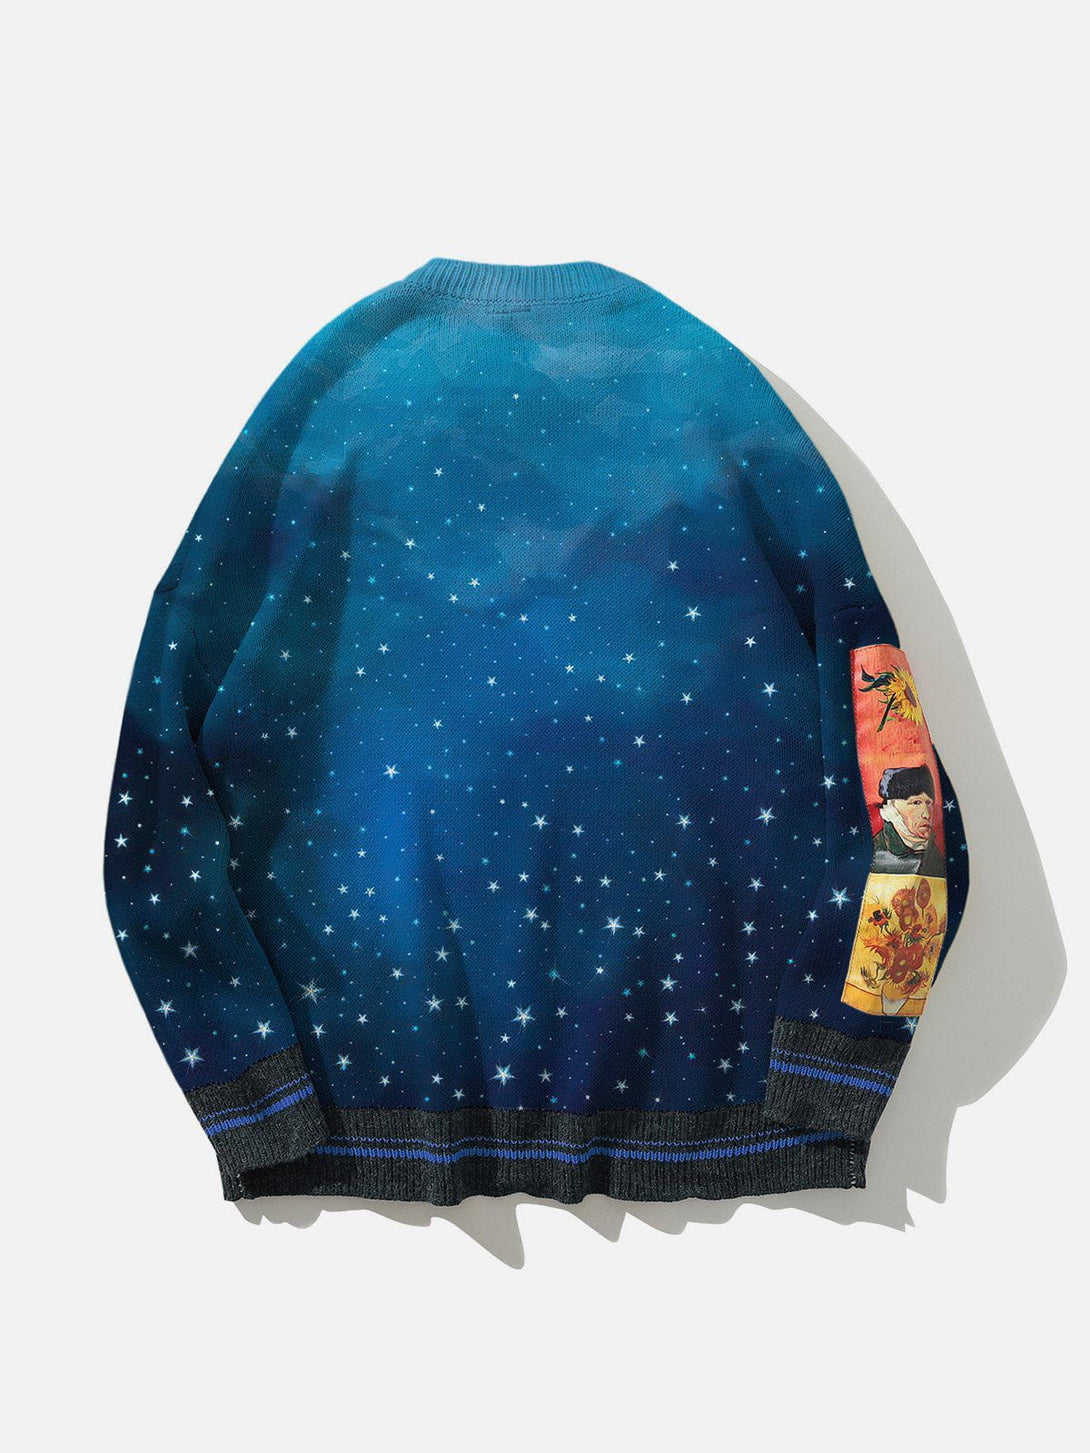 Majesda® - Van Gogh Print Starry Sweater outfit ideas streetwear fashion